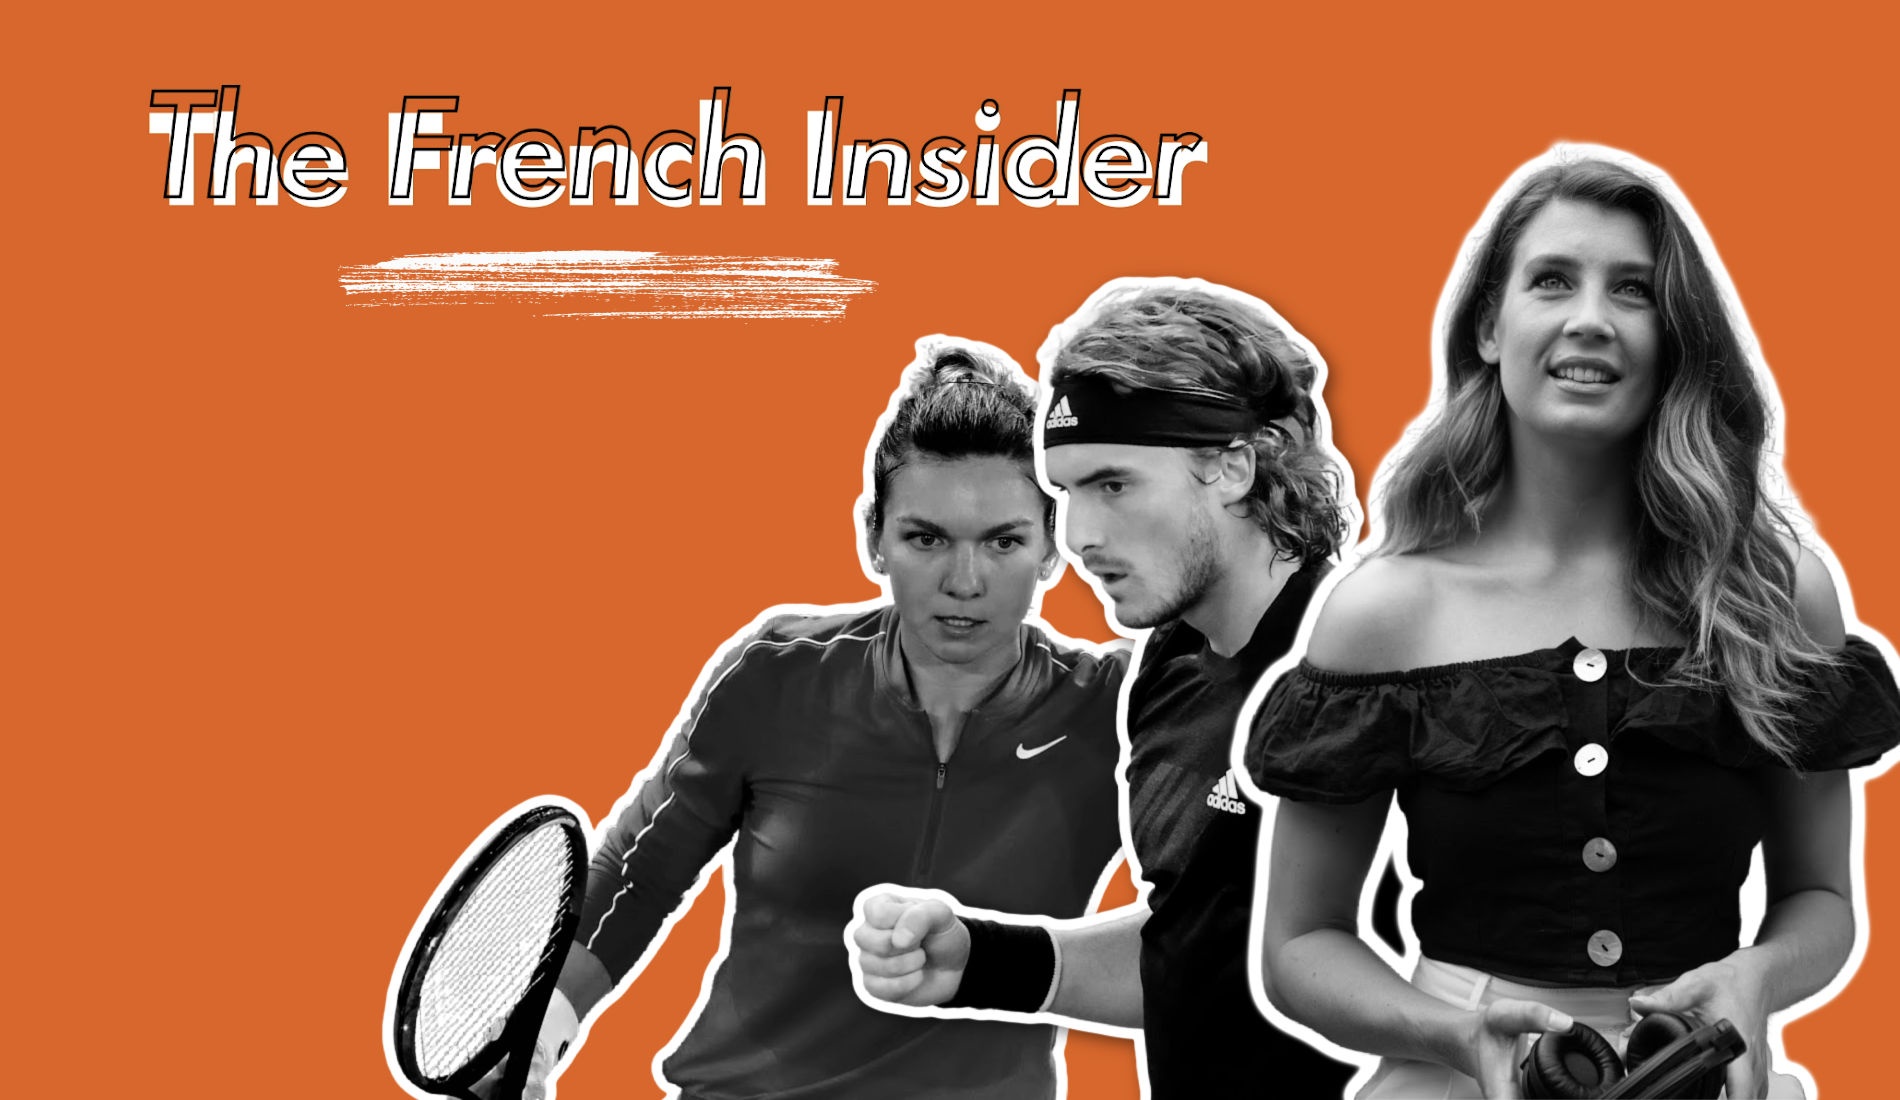 The French Insider #4, Simona Halep, Stefanos Tsitsipas and Jenny Drummond